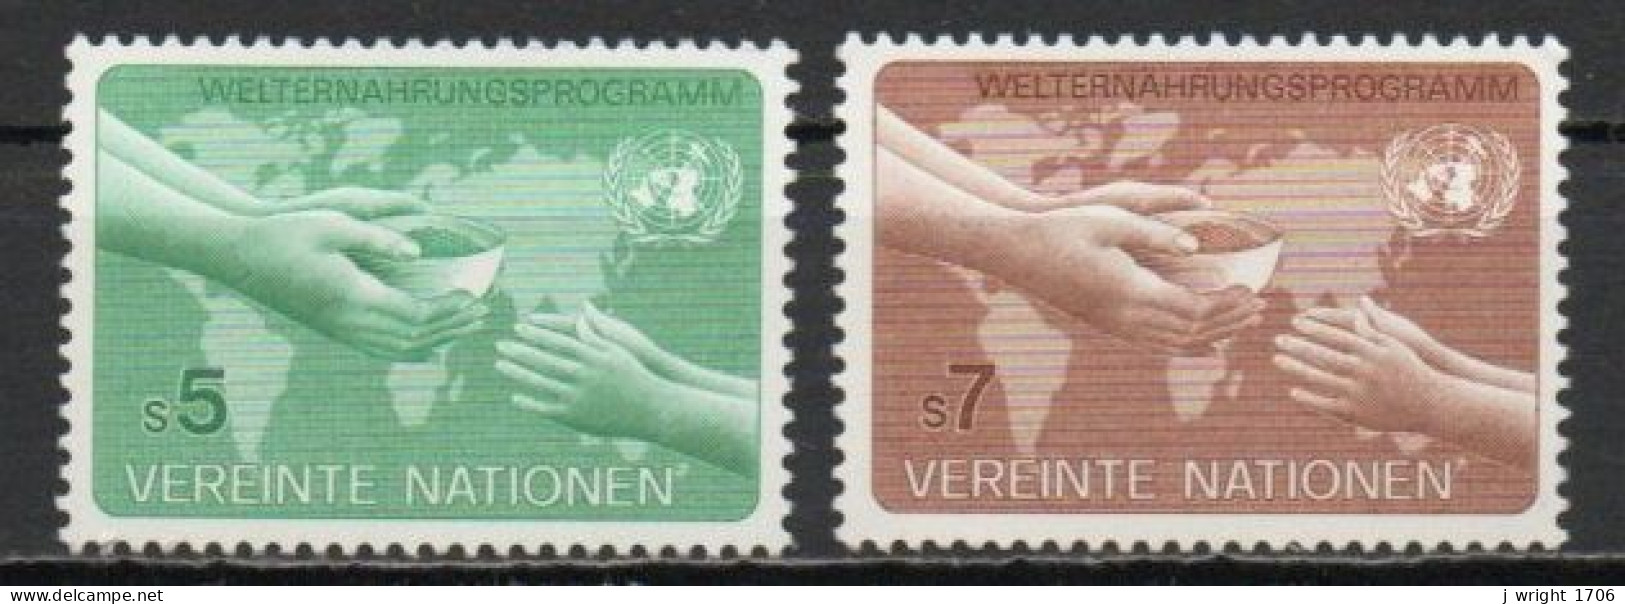 UN/Vienna, 1983, World Food Programme, Set, MNH - Unused Stamps